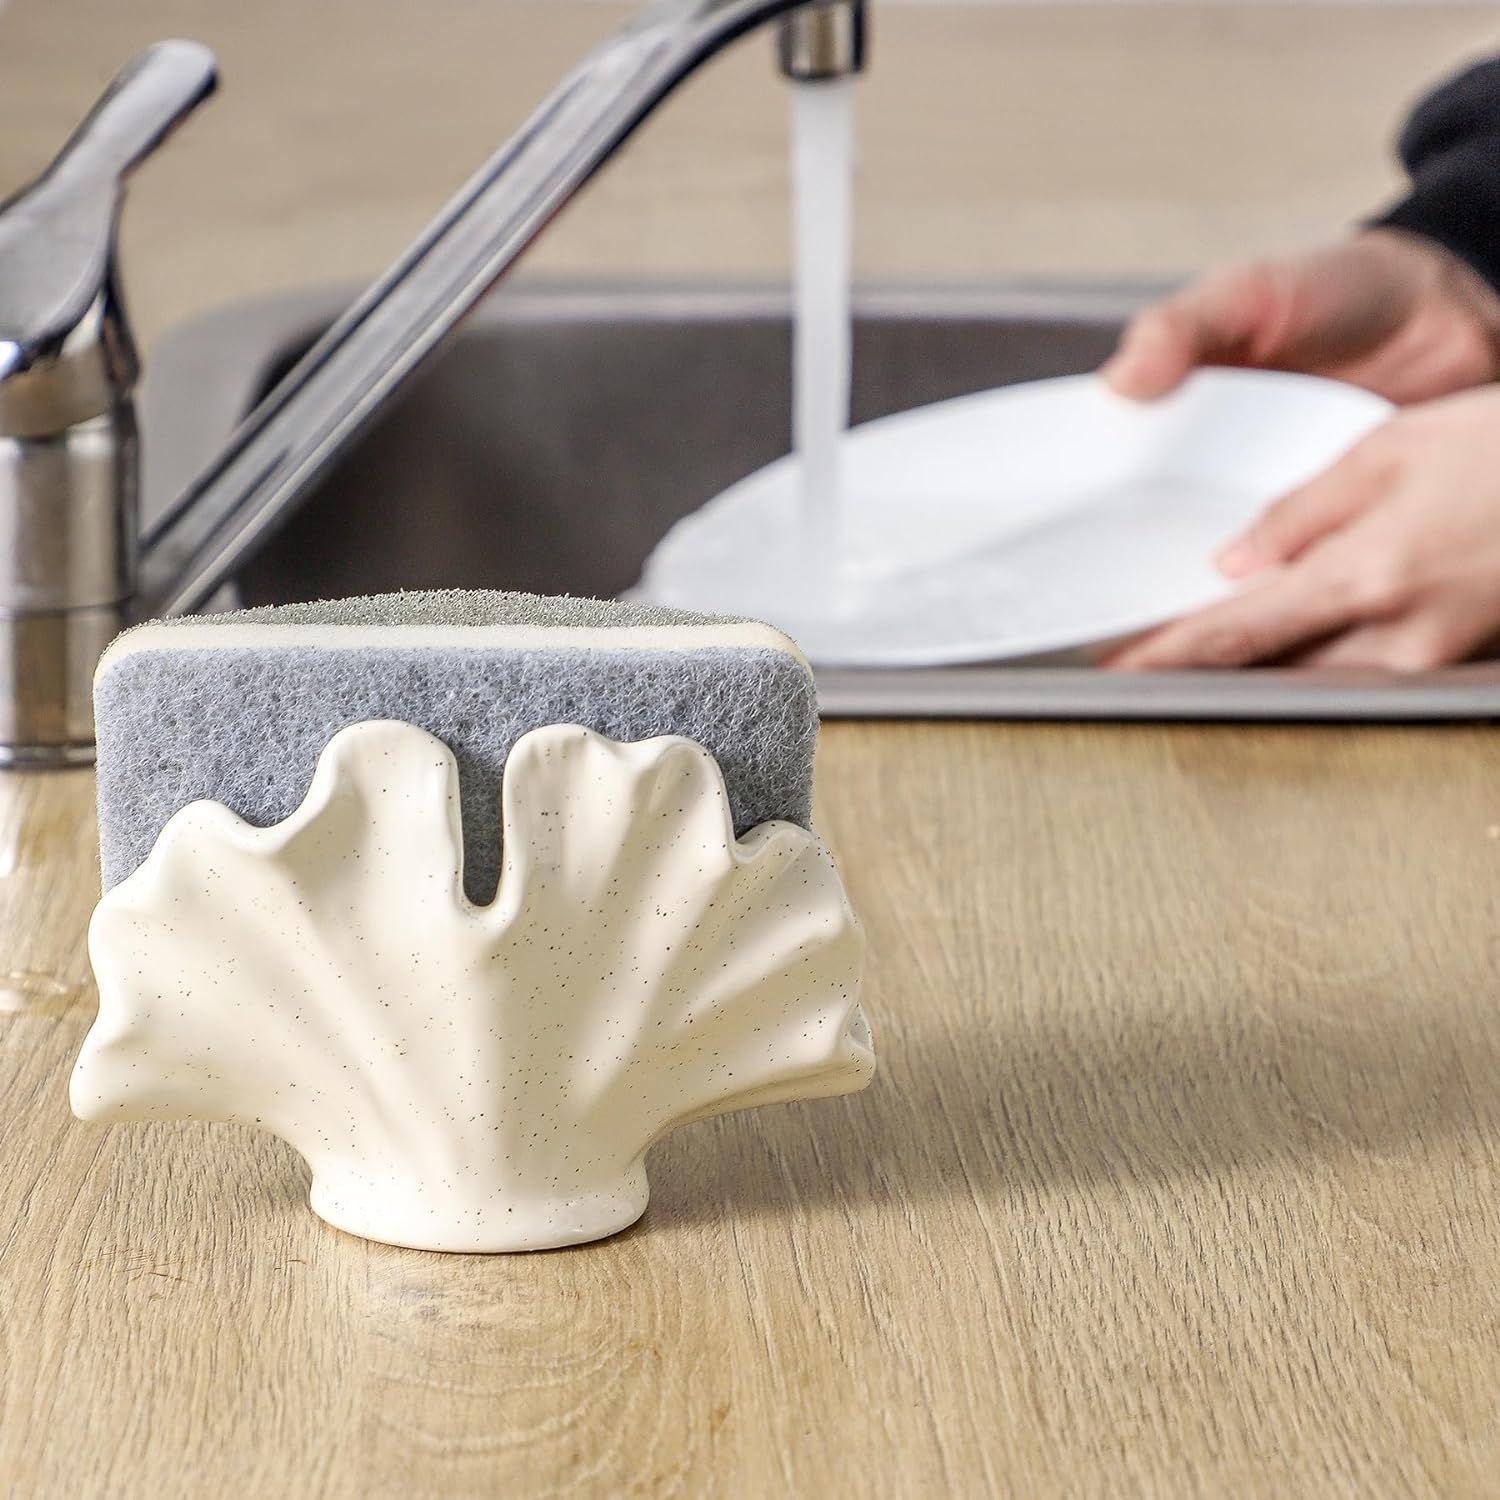 Ceramic Sponge Holder,Sponge Holder for Kitchen Sink,Compact Sink Caddy Organizer-Scouring Pad an... | Amazon (US)